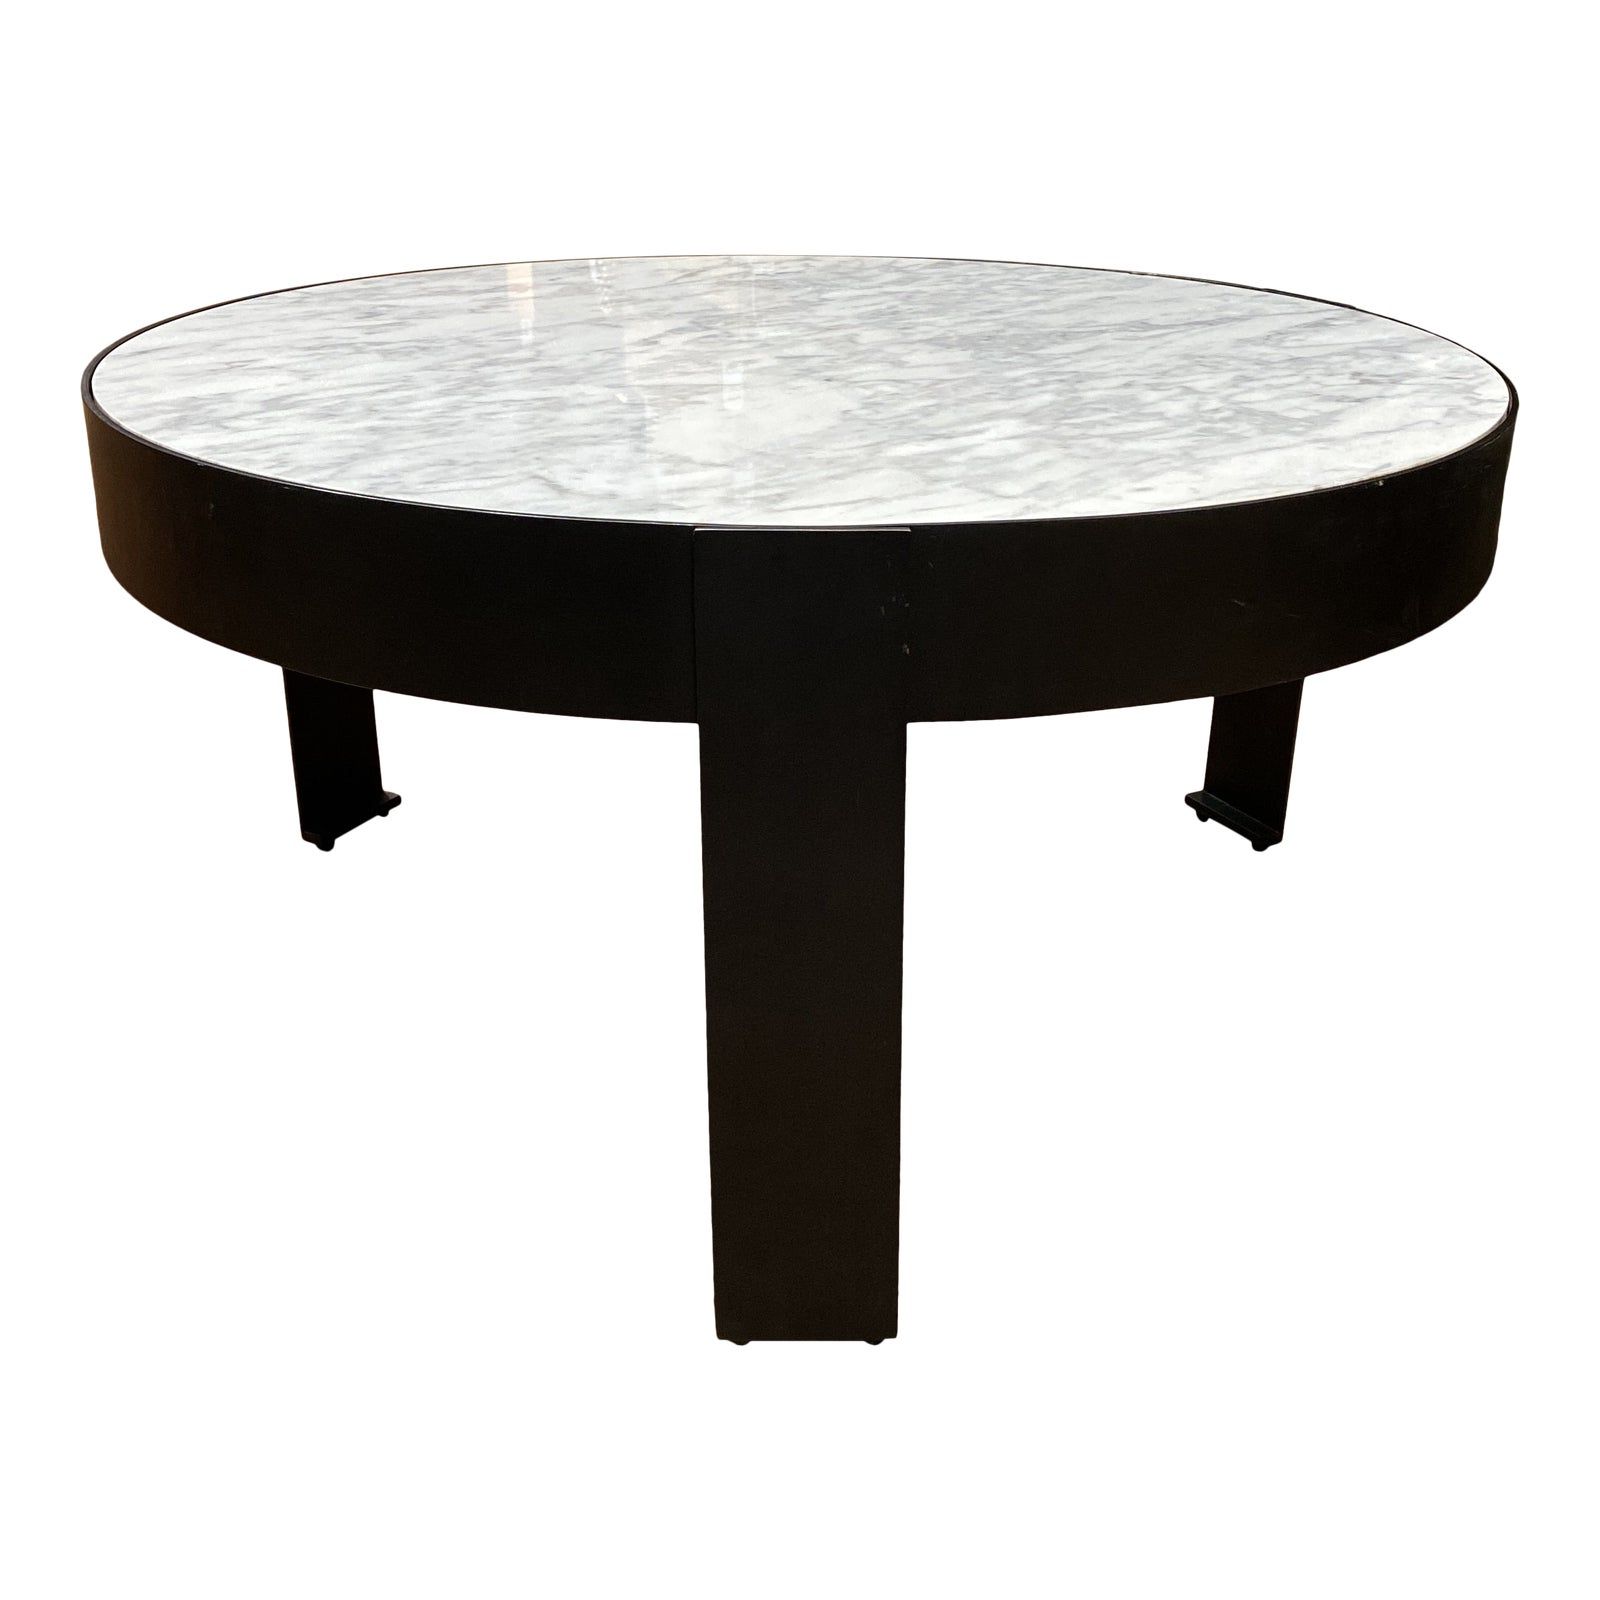 Round Iron Coffee Tables Throughout Recent New Kelly Wearstler Round White Marble + Iron Coffee Table (View 11 of 20)